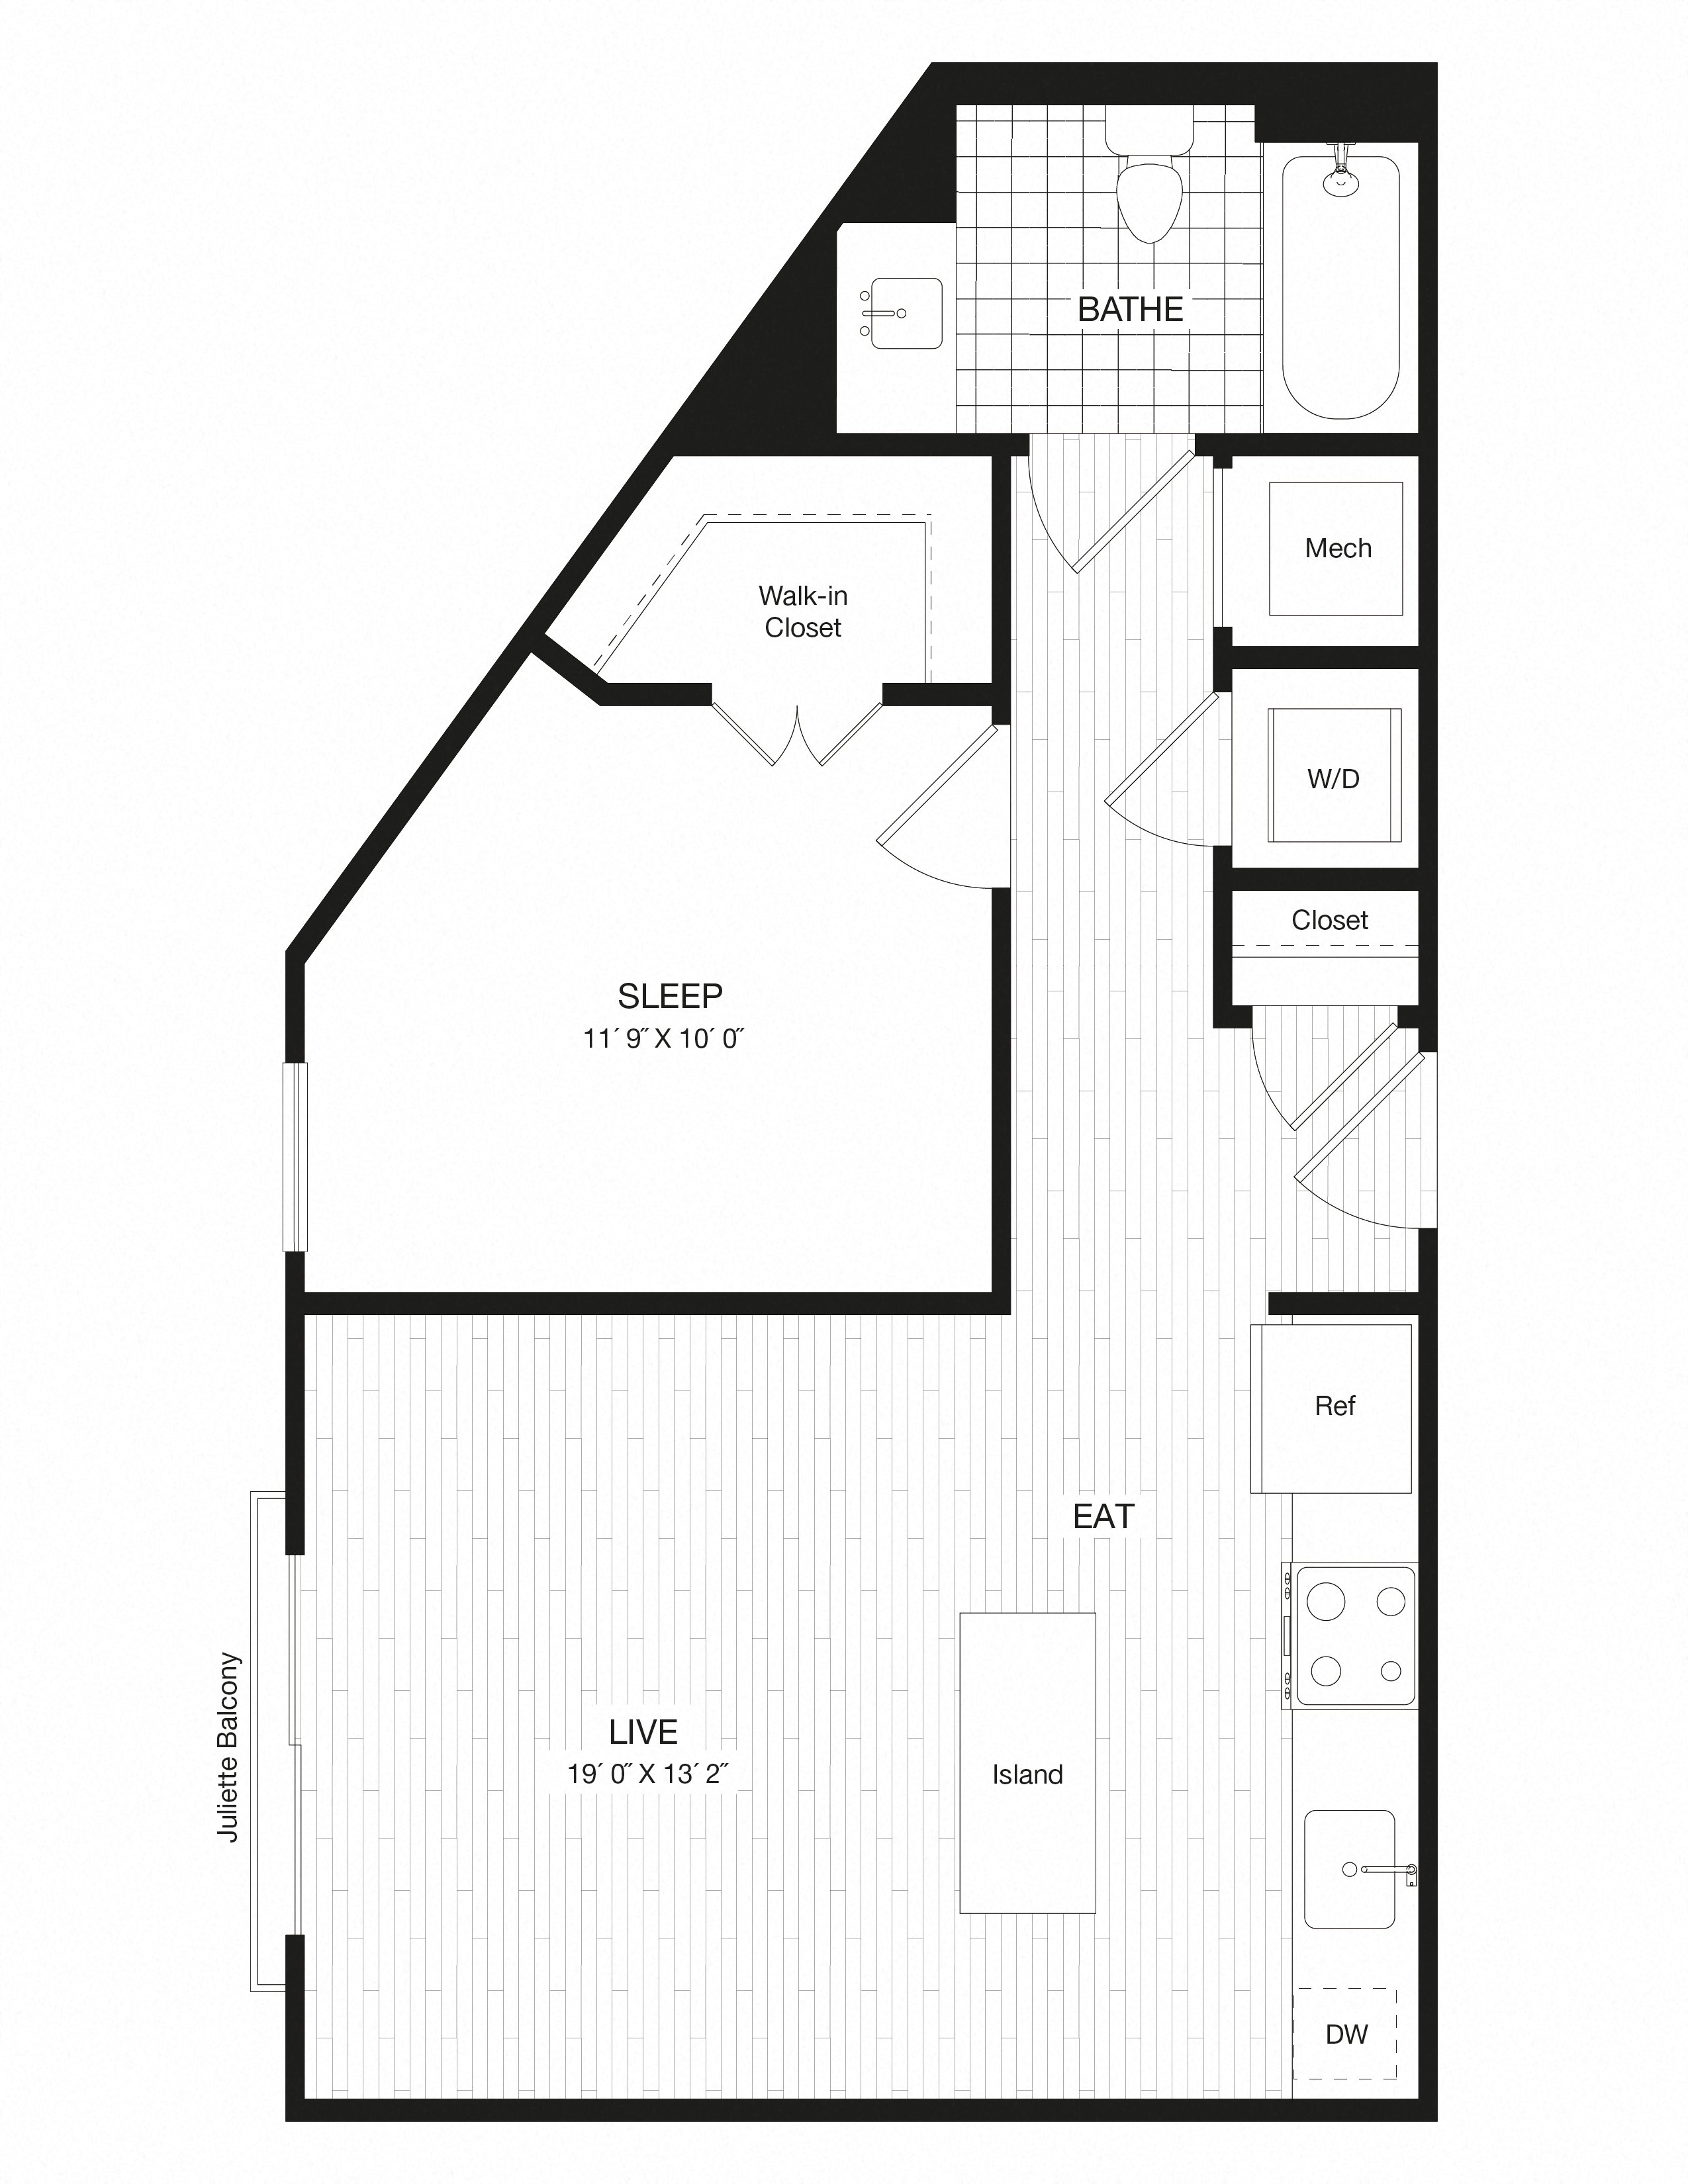 Apartment 29-217 enlarge view